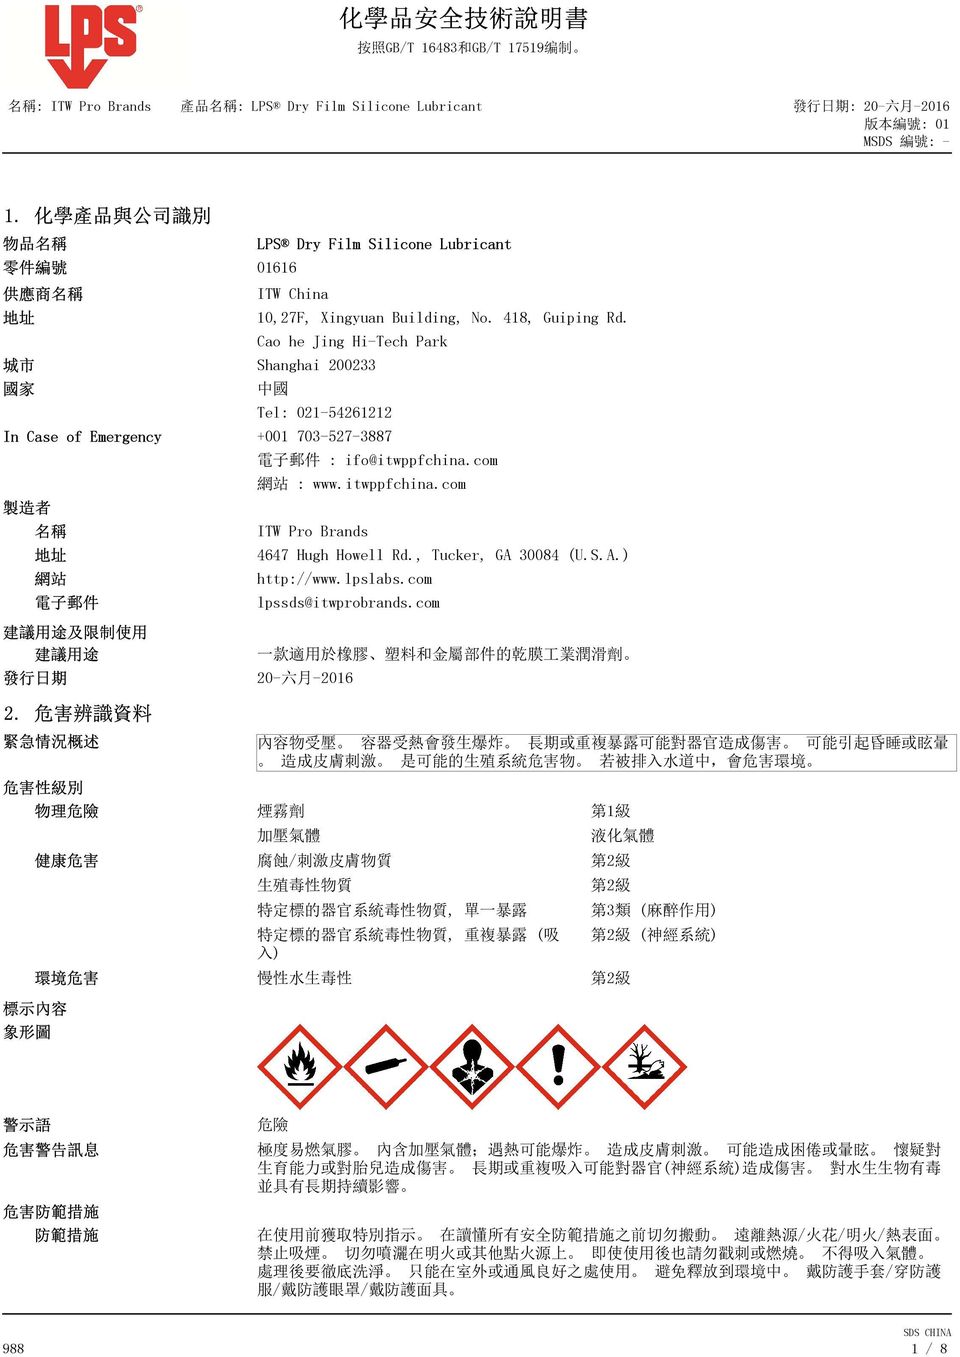 Cao he Jing Hi-Tech Park 城 市 Shanghai 200233 國 家 中 國 Tel: 021-54261212 In Case of Emergency +001 703-527-3887 製 造 者 名 稱 地 址 網 站 電 子 郵 件 建 議 用 途 及 限 制 使 用 建 議 用 途 發 行 日 期 2.